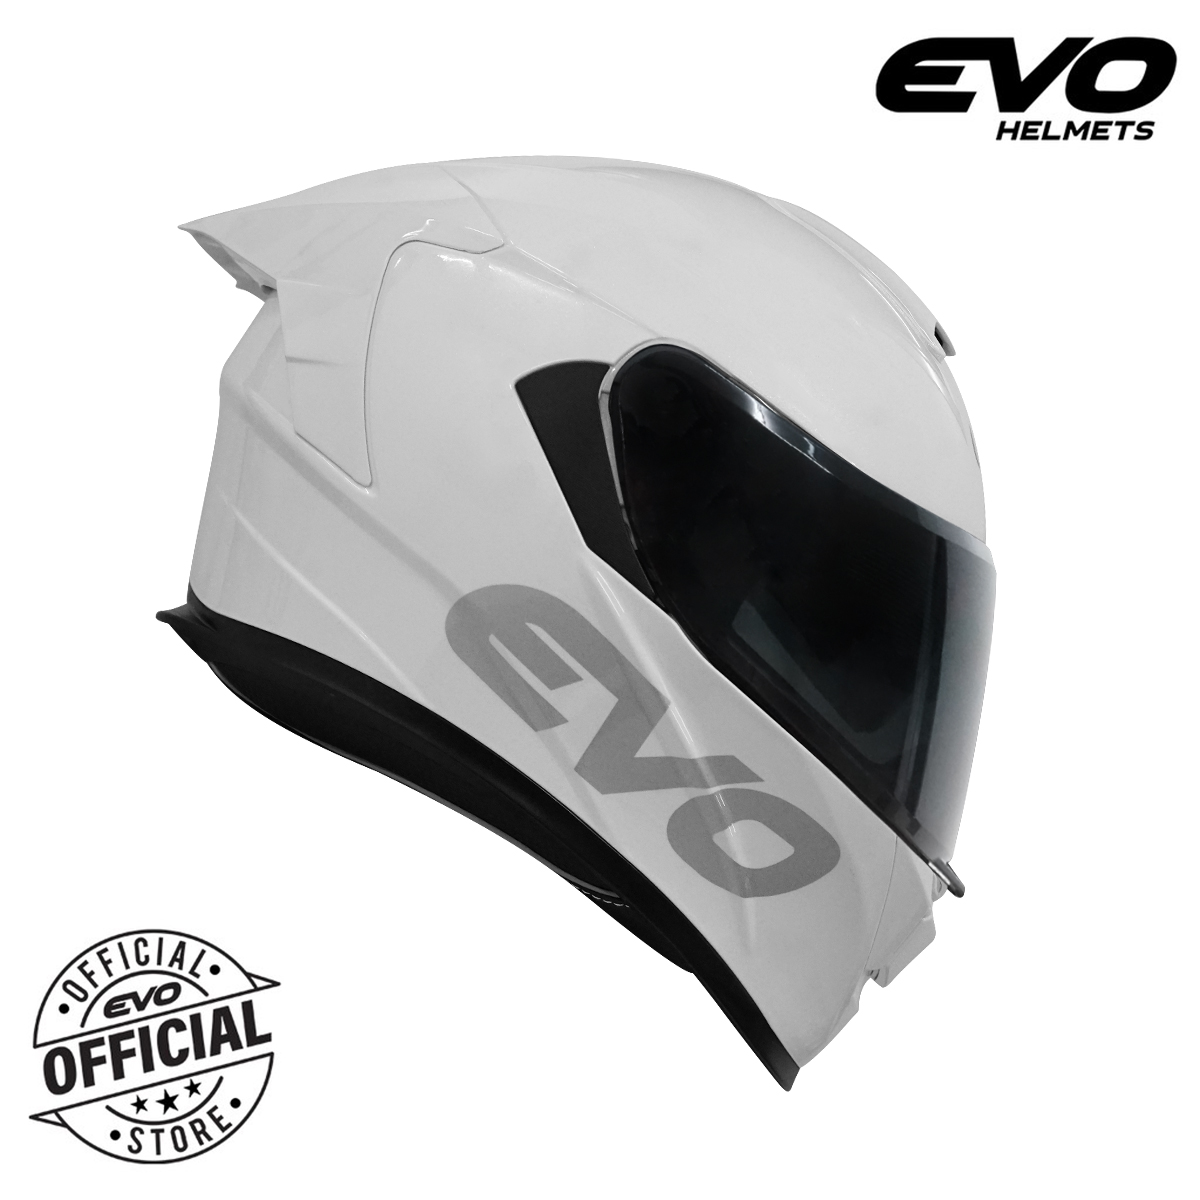 Gt Pro Evo Helmet Price Voucher Jul 21 Biggo Philippines